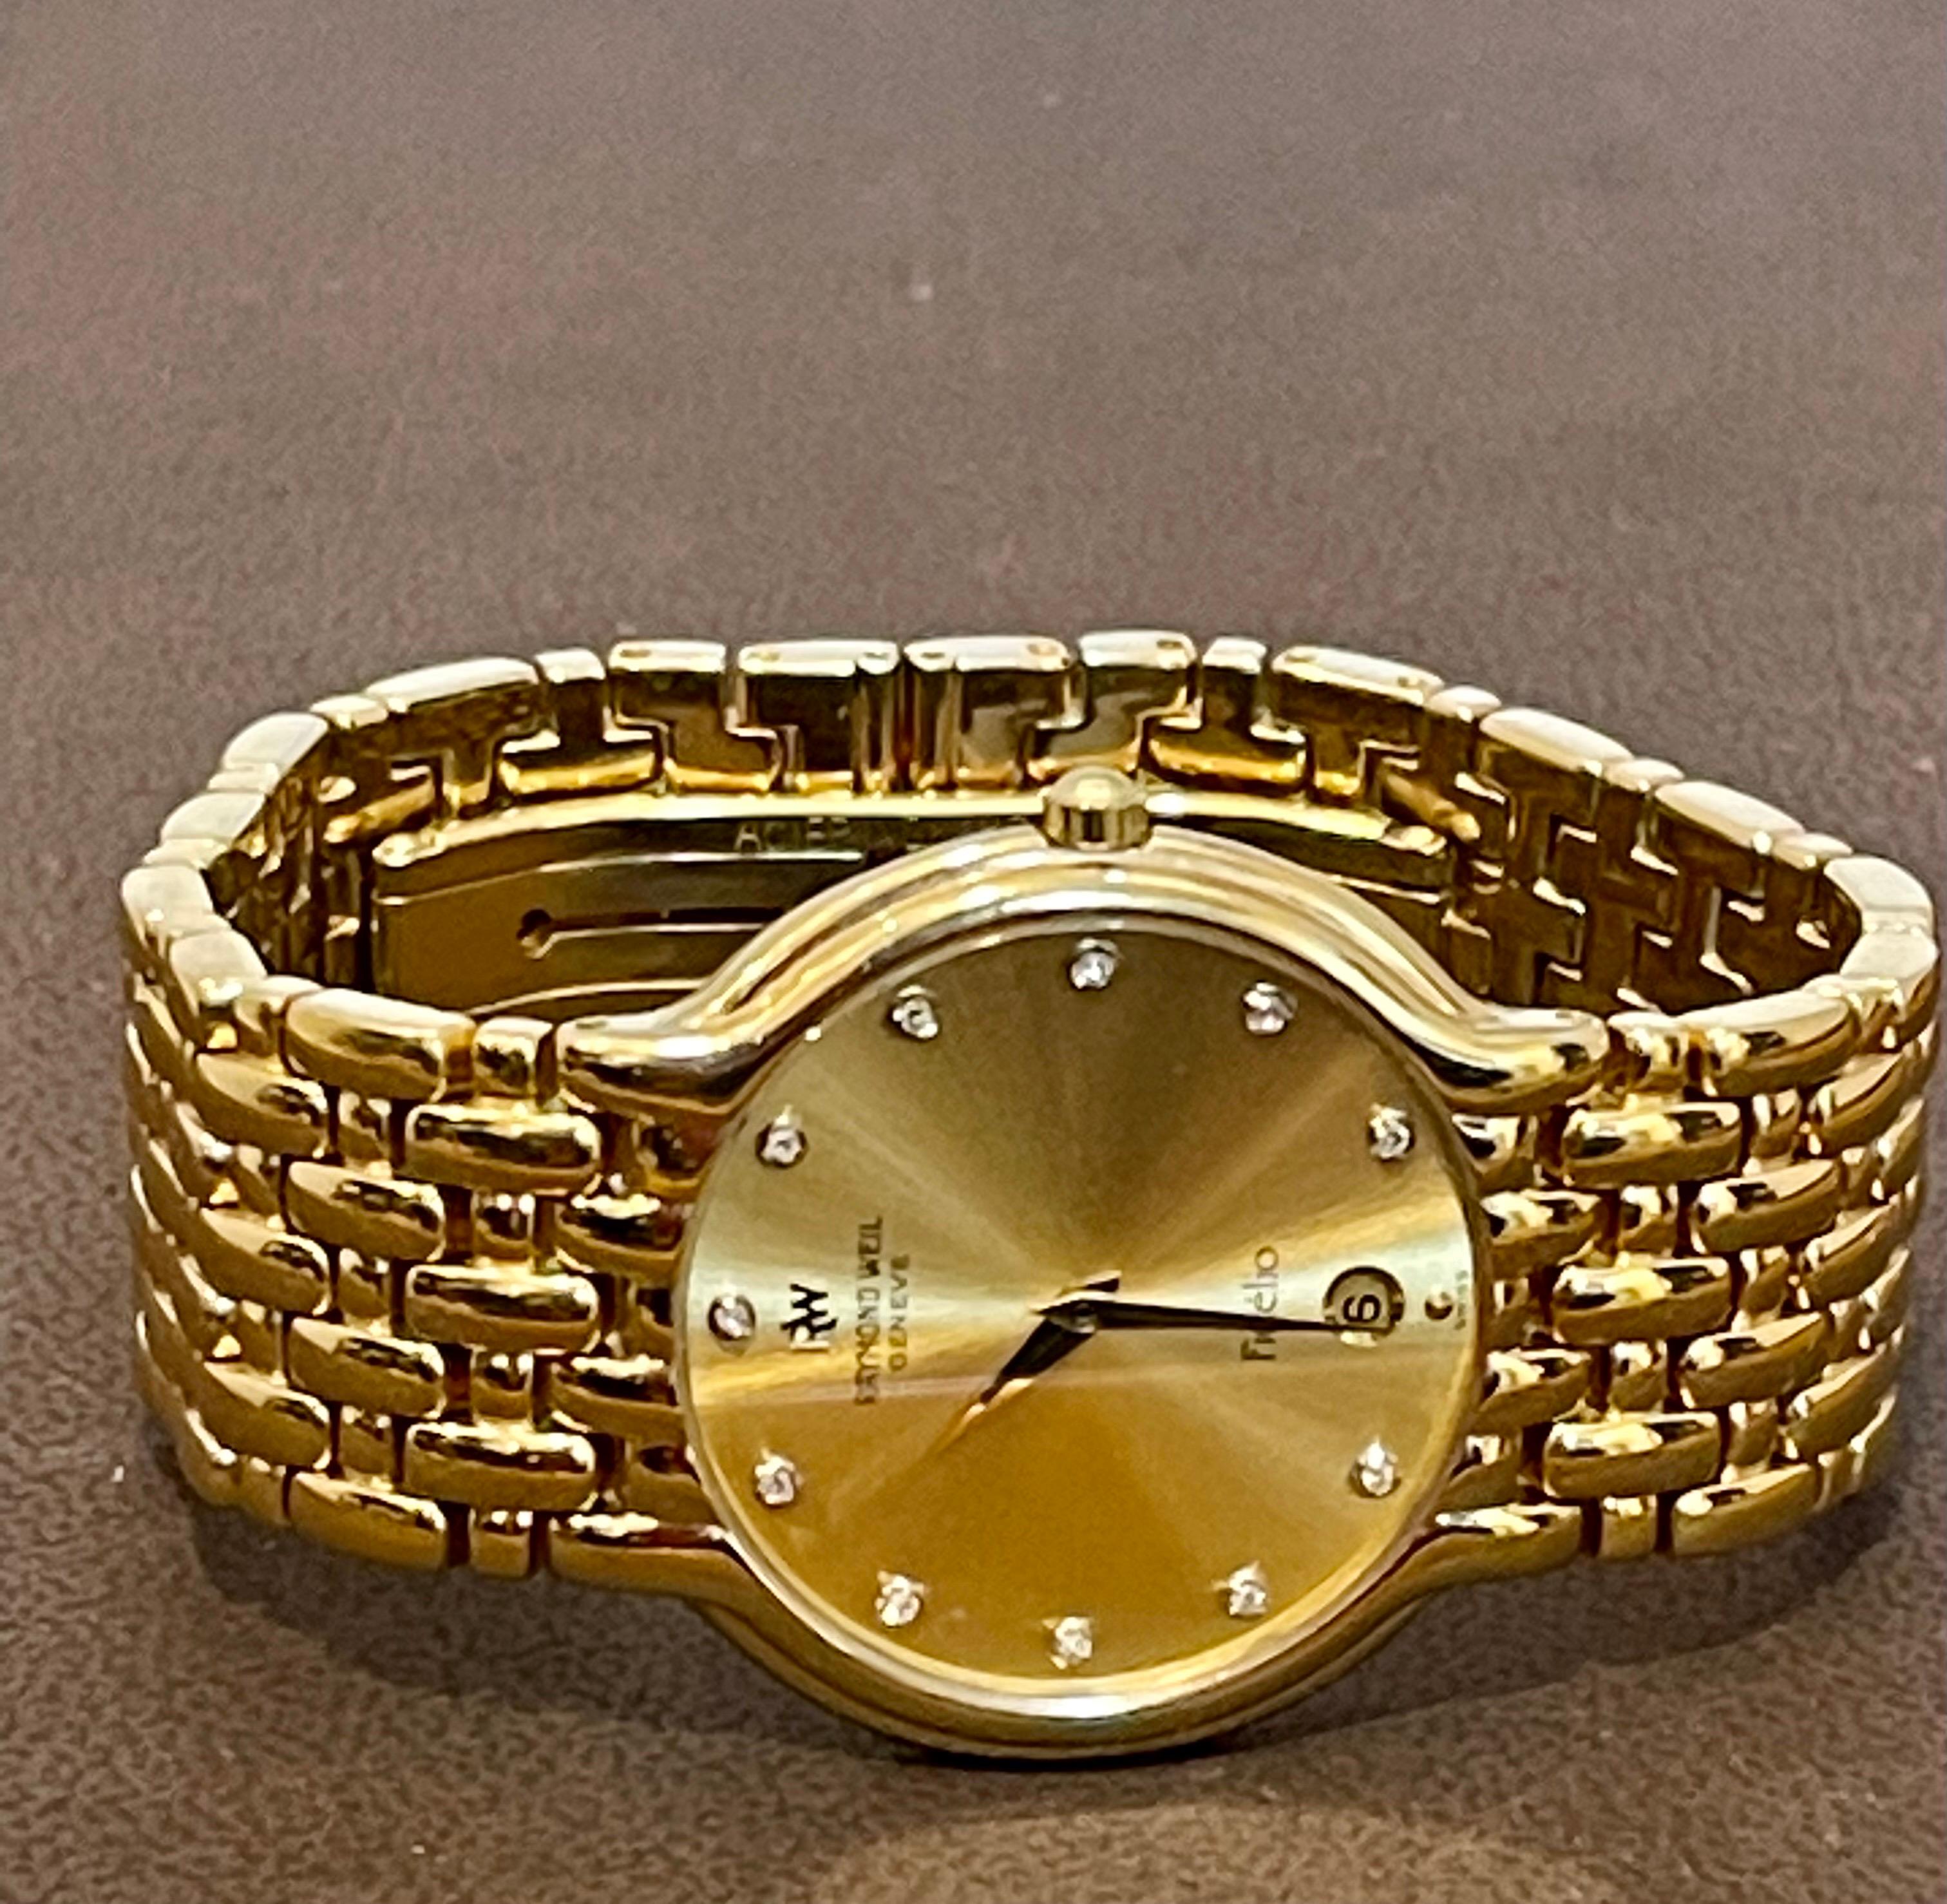 Men's Raymond Weil Fidelio 18K Gold Electroplated Watch with Date & Diamonds